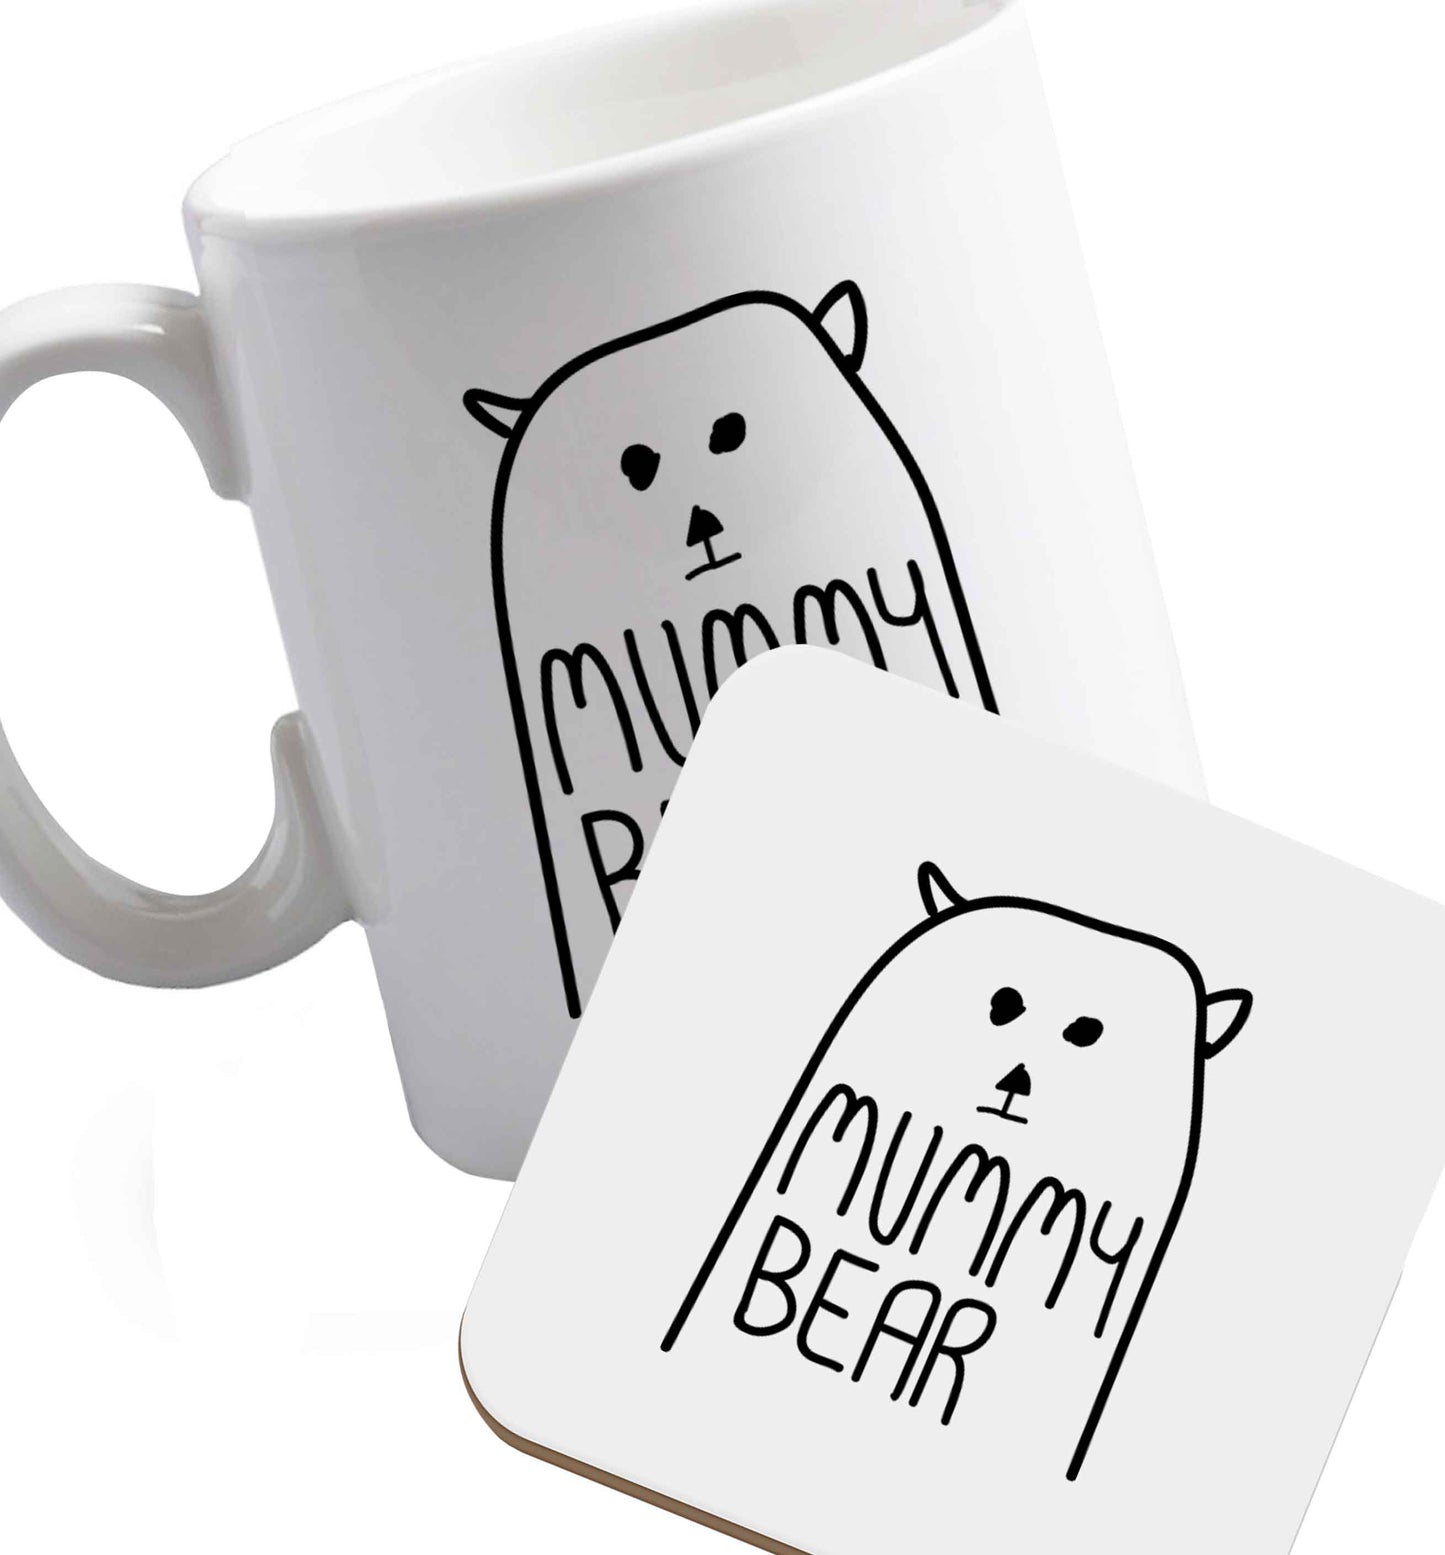 10 oz Mummy bear ceramic mug and coaster set right handed